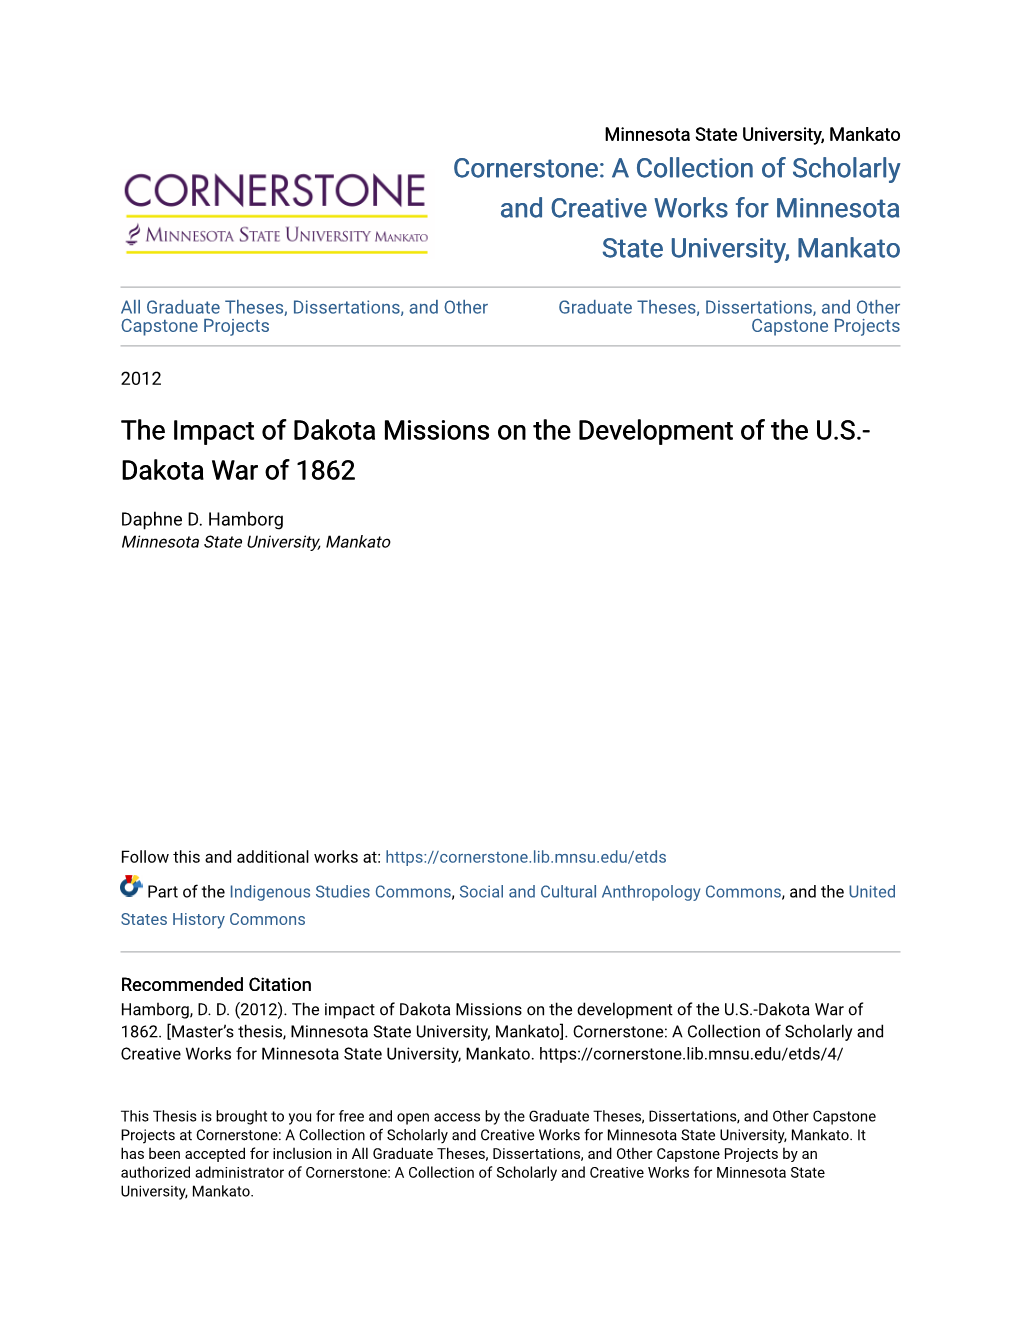 The Impact of Dakota Missions on the Development of the U.S.-Dakota War of 1862